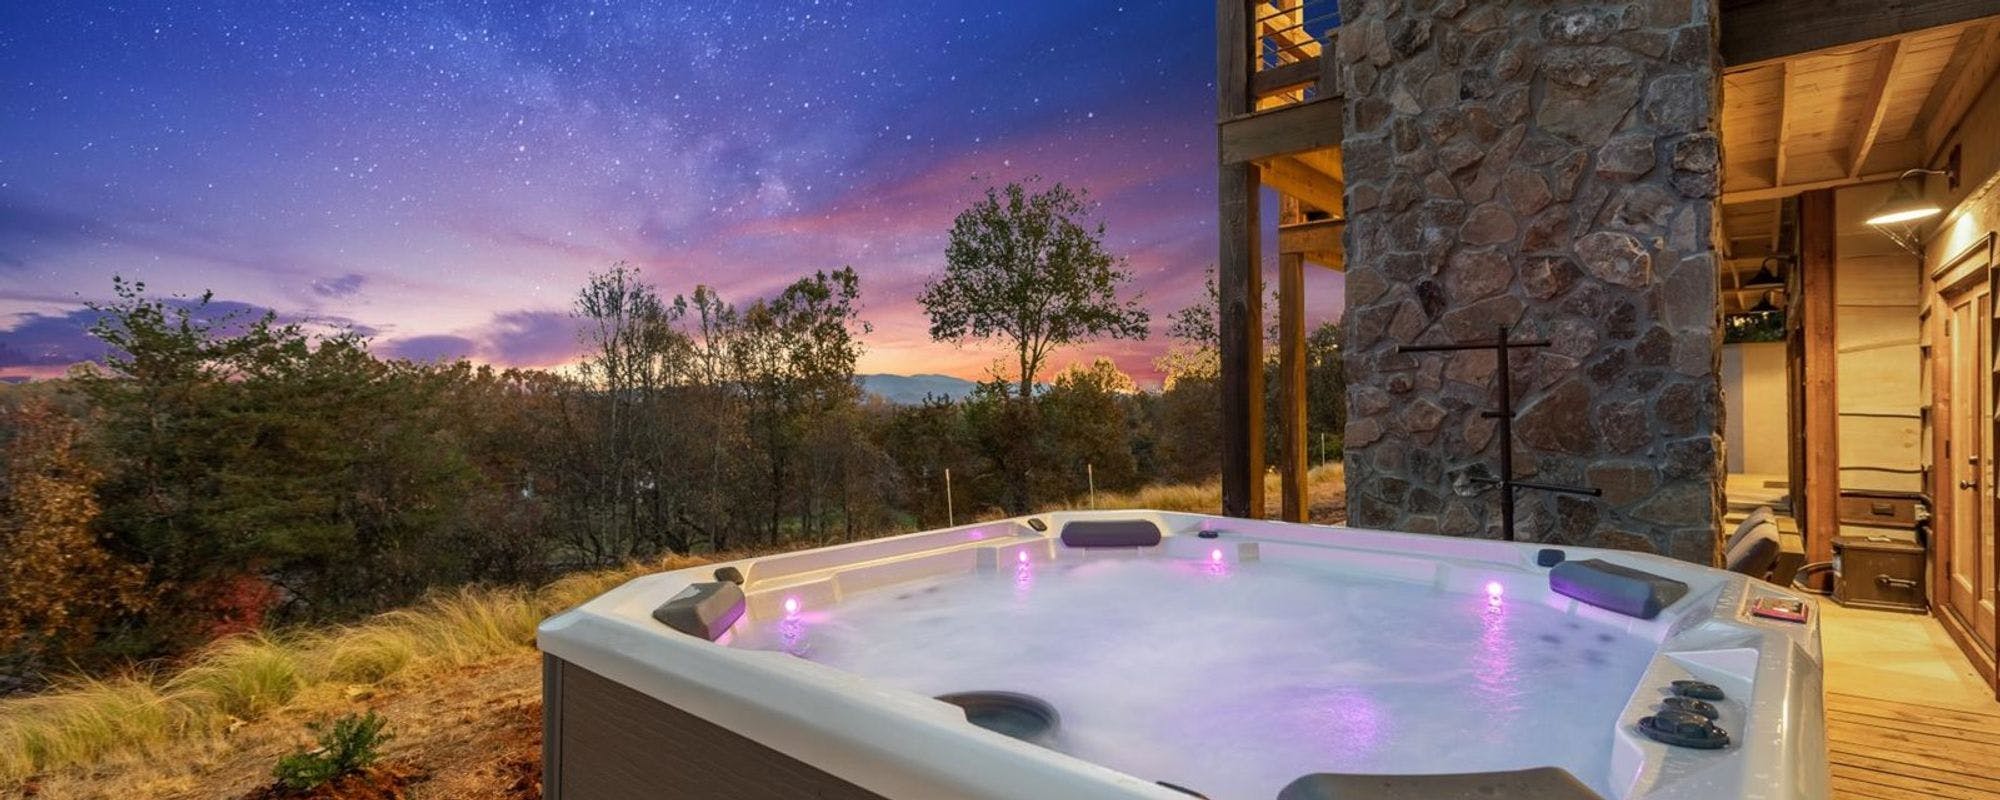 Hot tub night sky in Blue Ridge